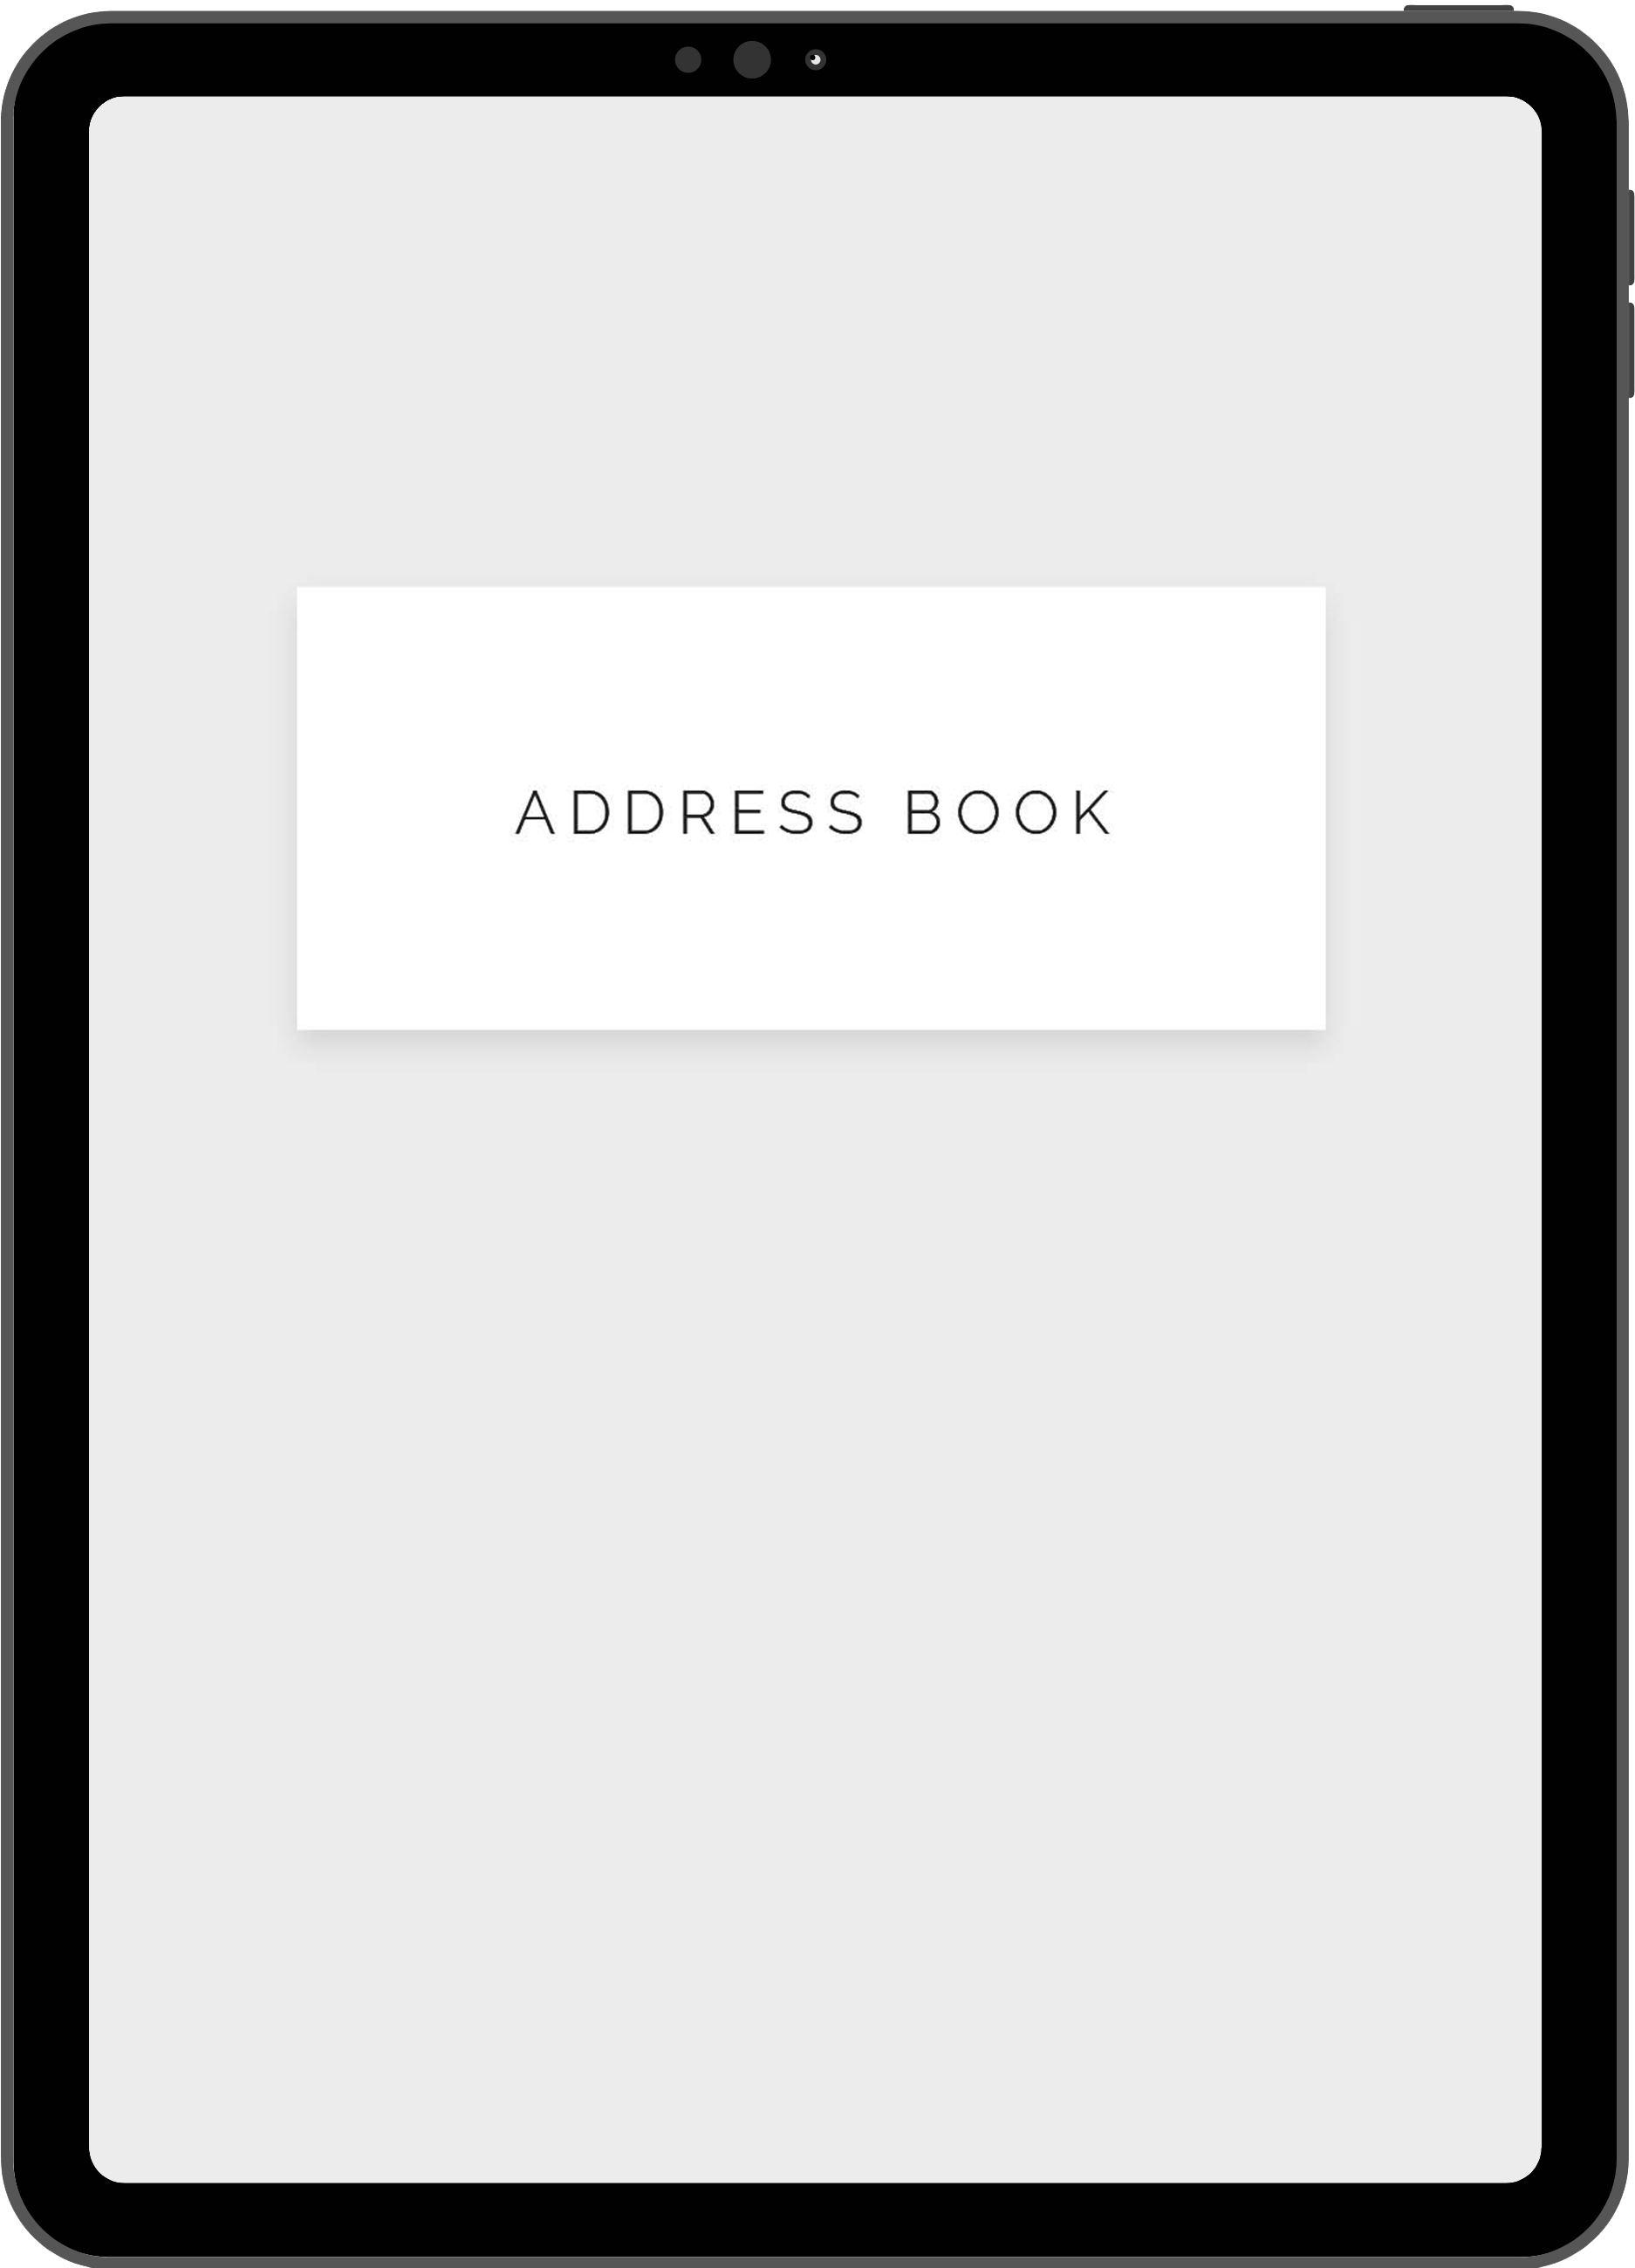 Digital address book